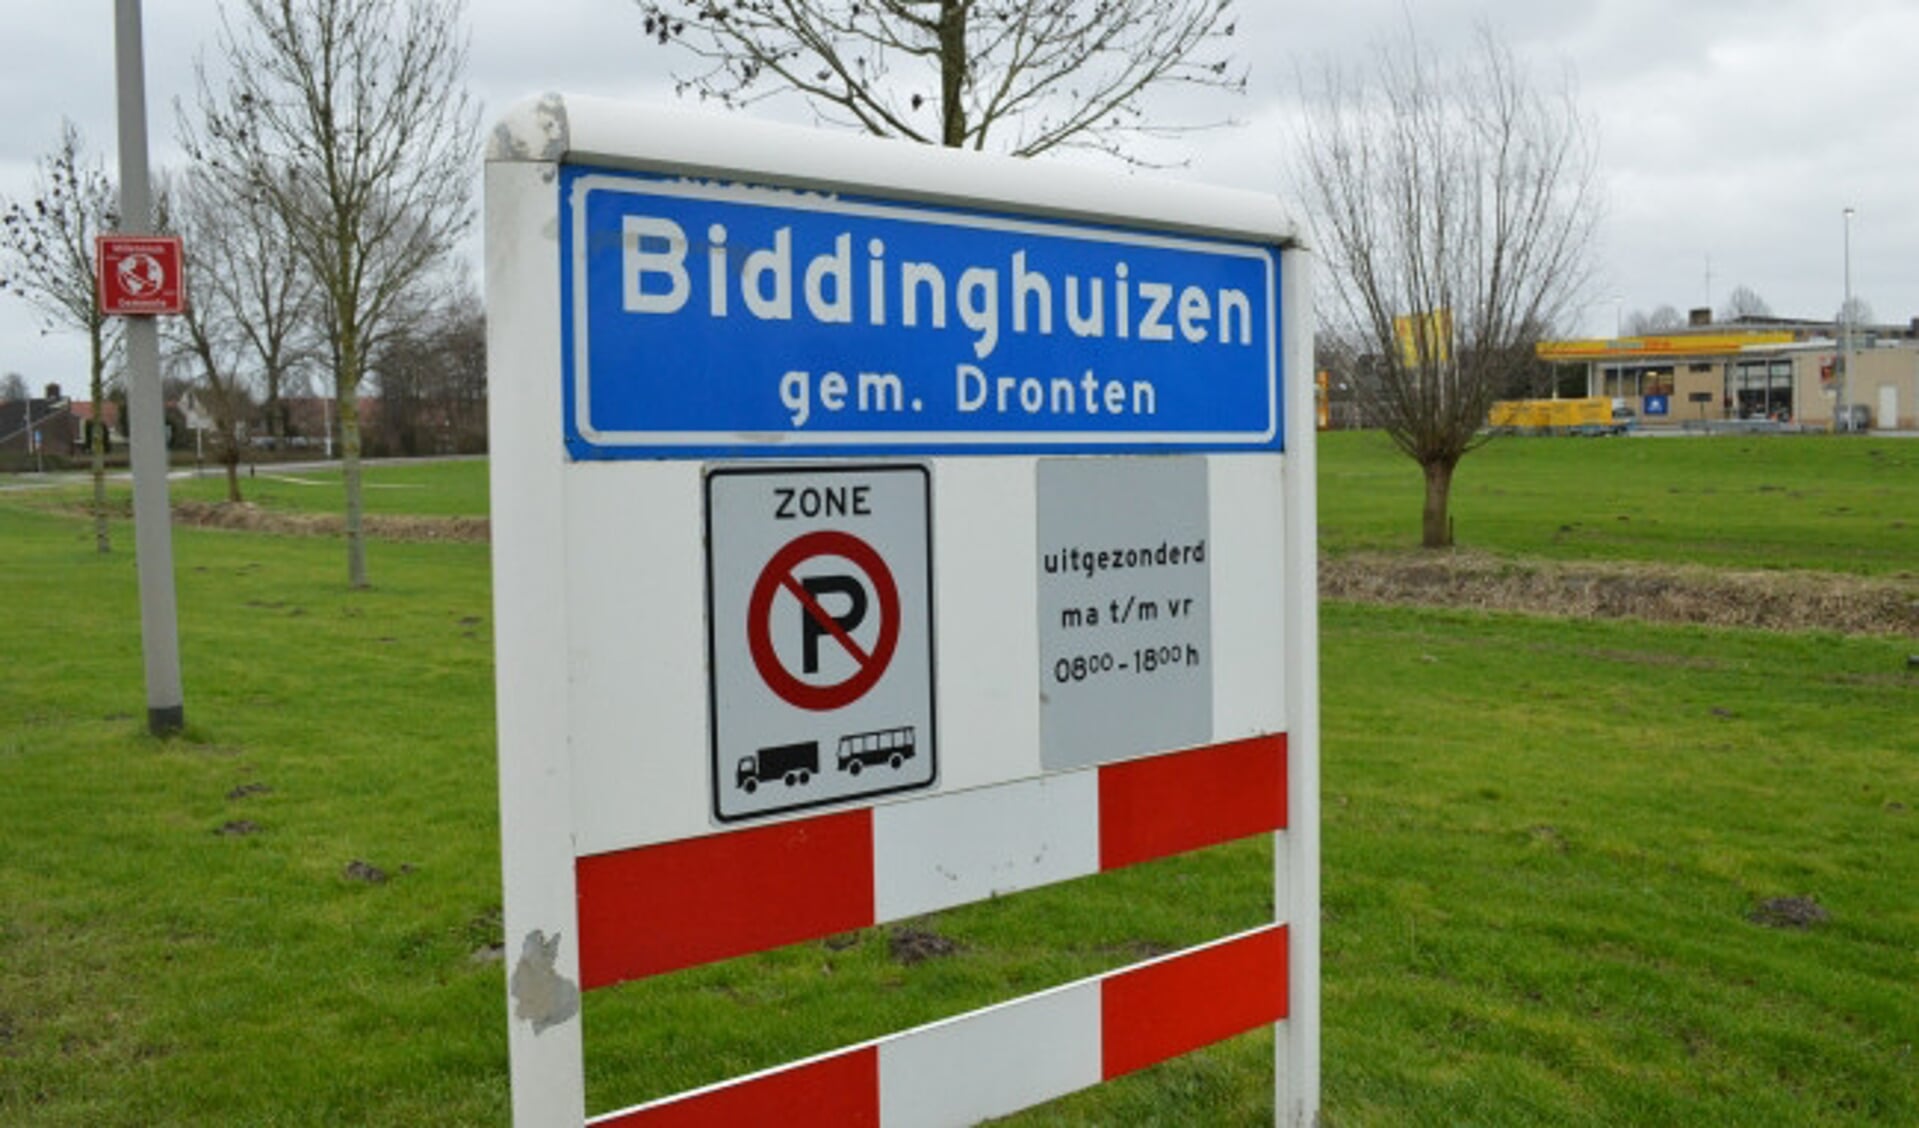  Biddinghuizen